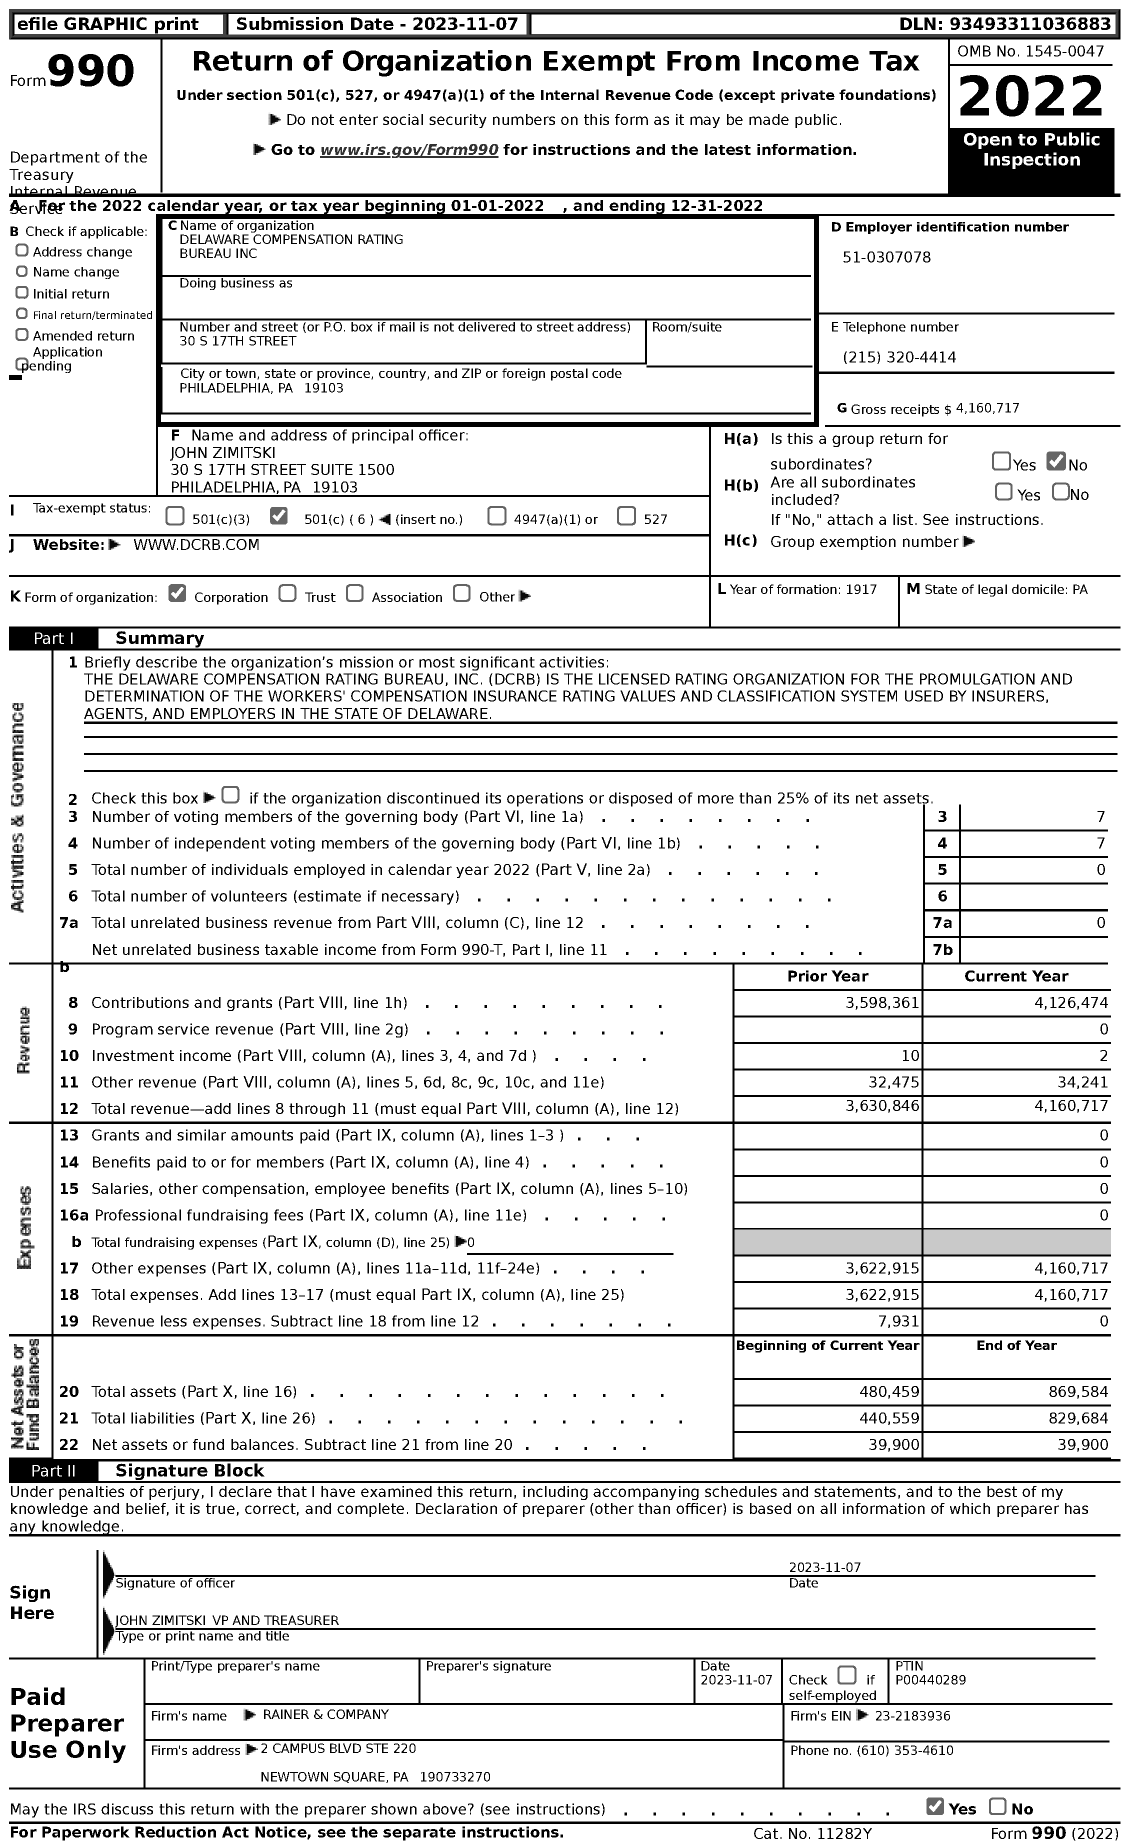 Image of first page of 2022 Form 990 for Delaware Compensation Rating Bureau (DCRB)